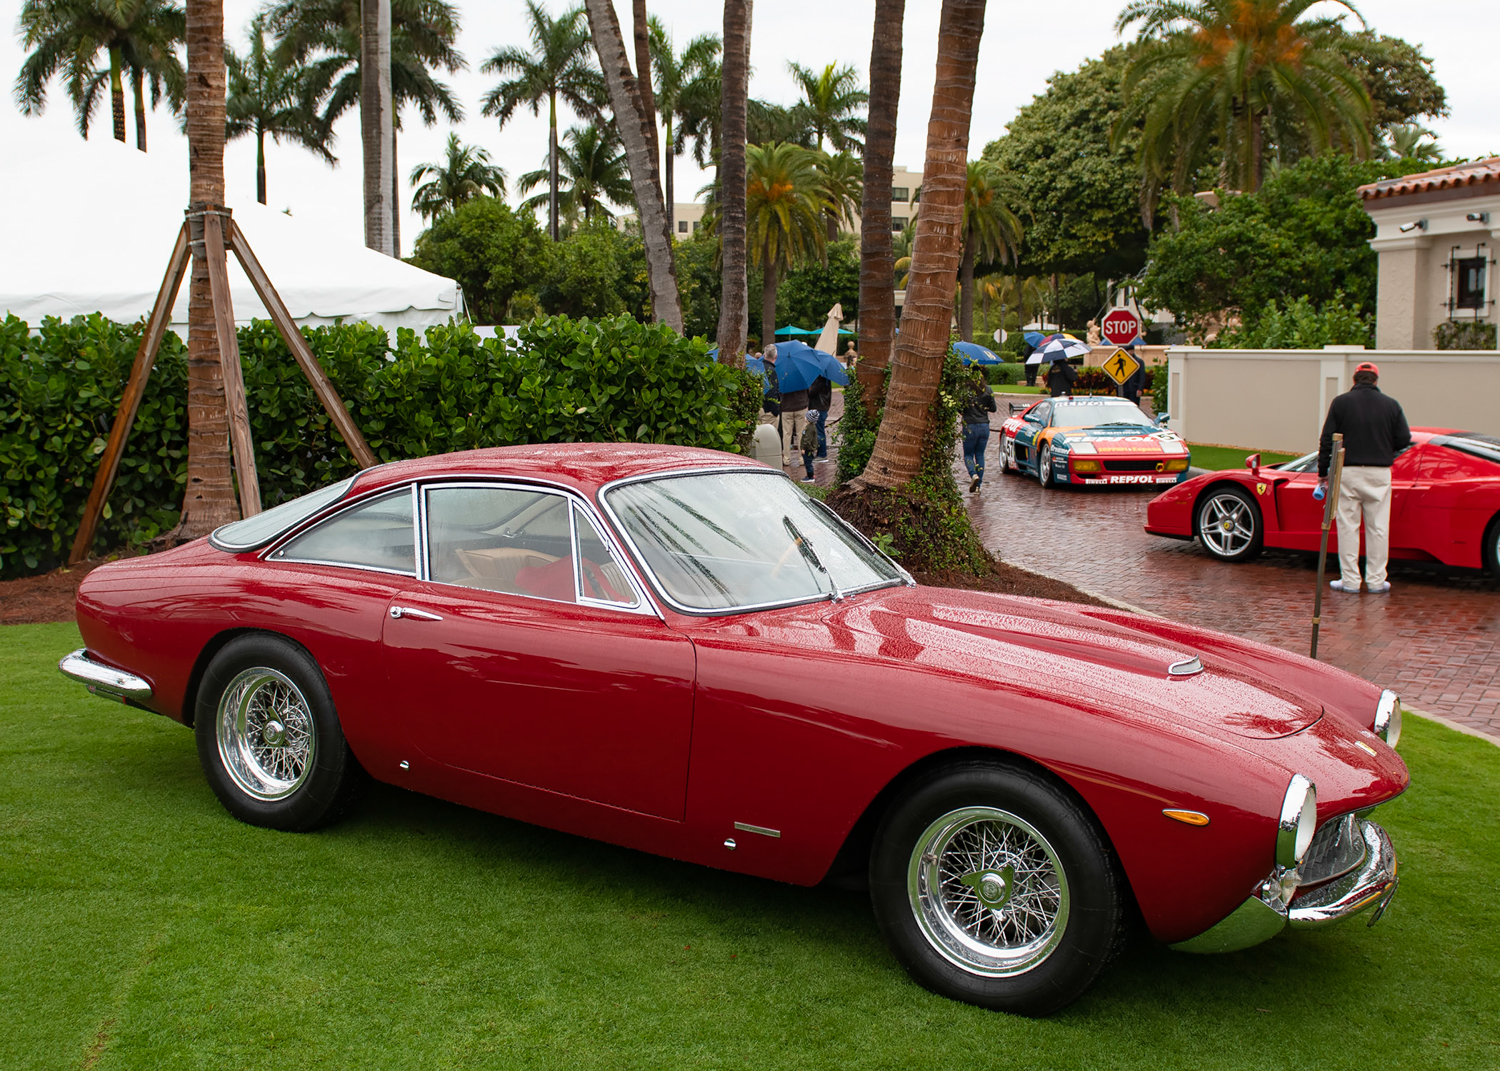 Cavallino 28   Concorso d'Eleganza
1964 Ferrari 250 GTL Lusso ser# 5247GT Chuck Andersen